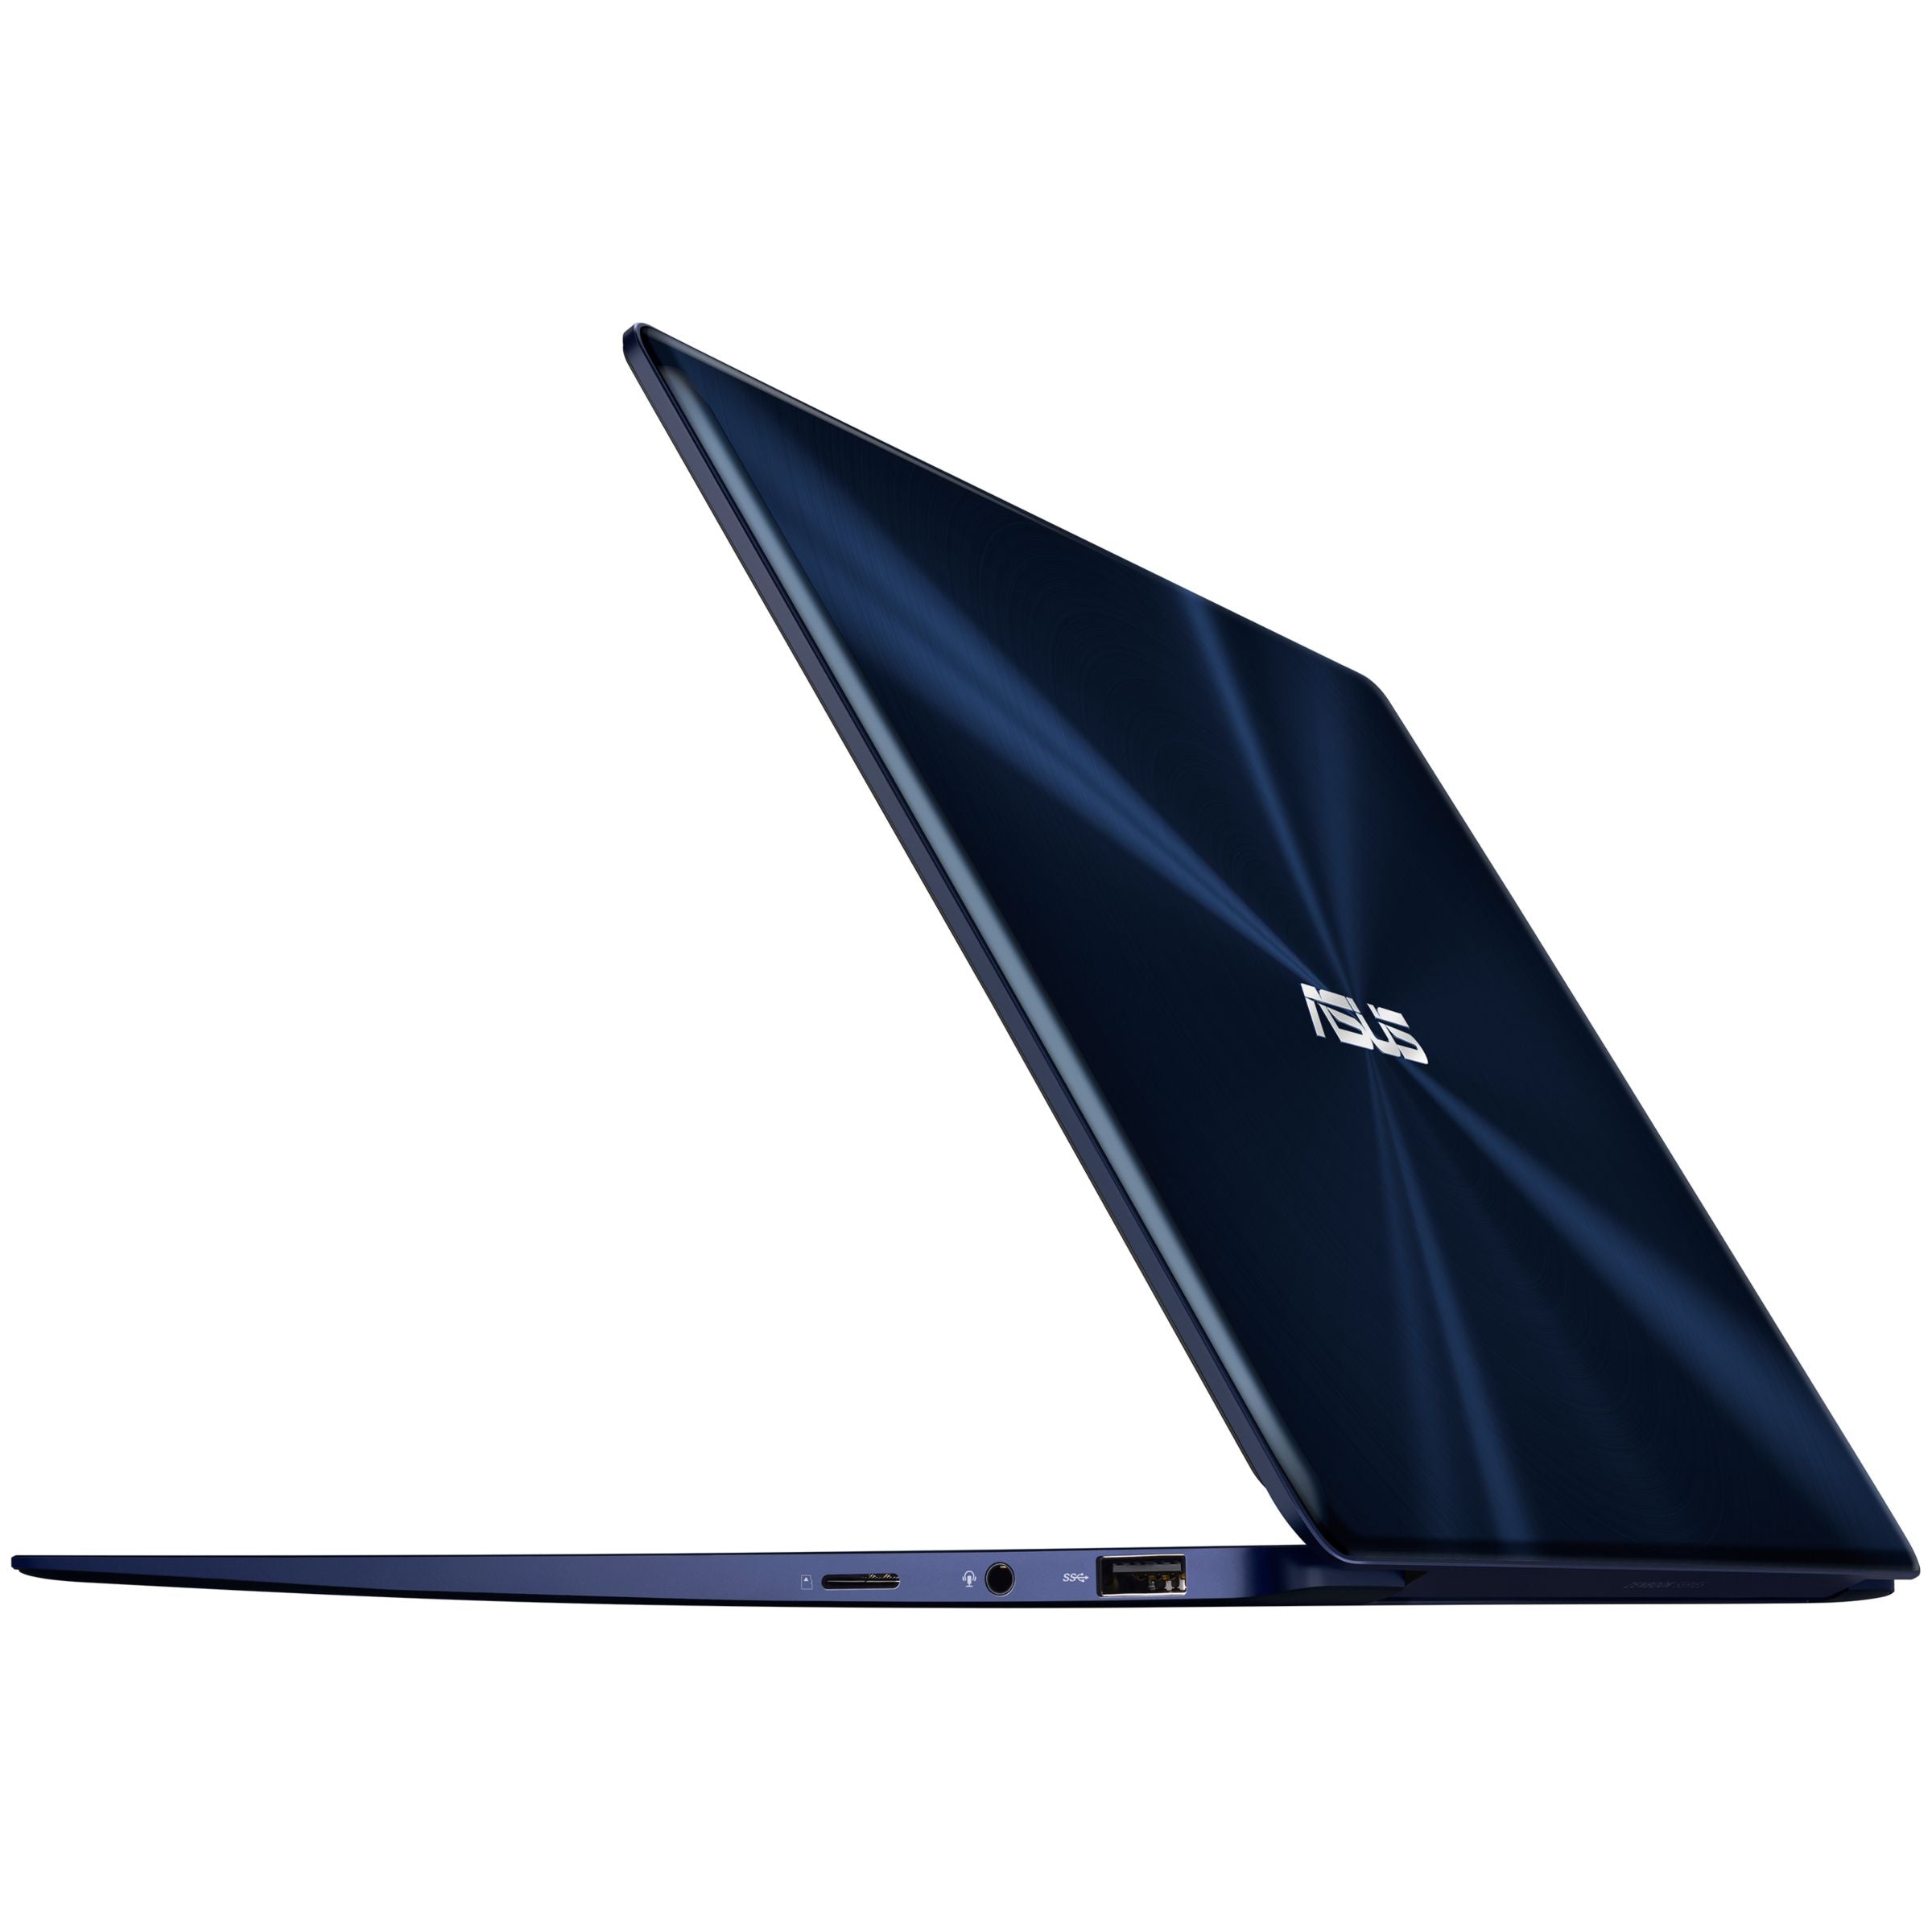 ASUS Zenbook UX331UN-EG009T 13.3" Laptop, Intel Core i5, 8GB RAM, 256GB SSD, Blue - Refurbished Good